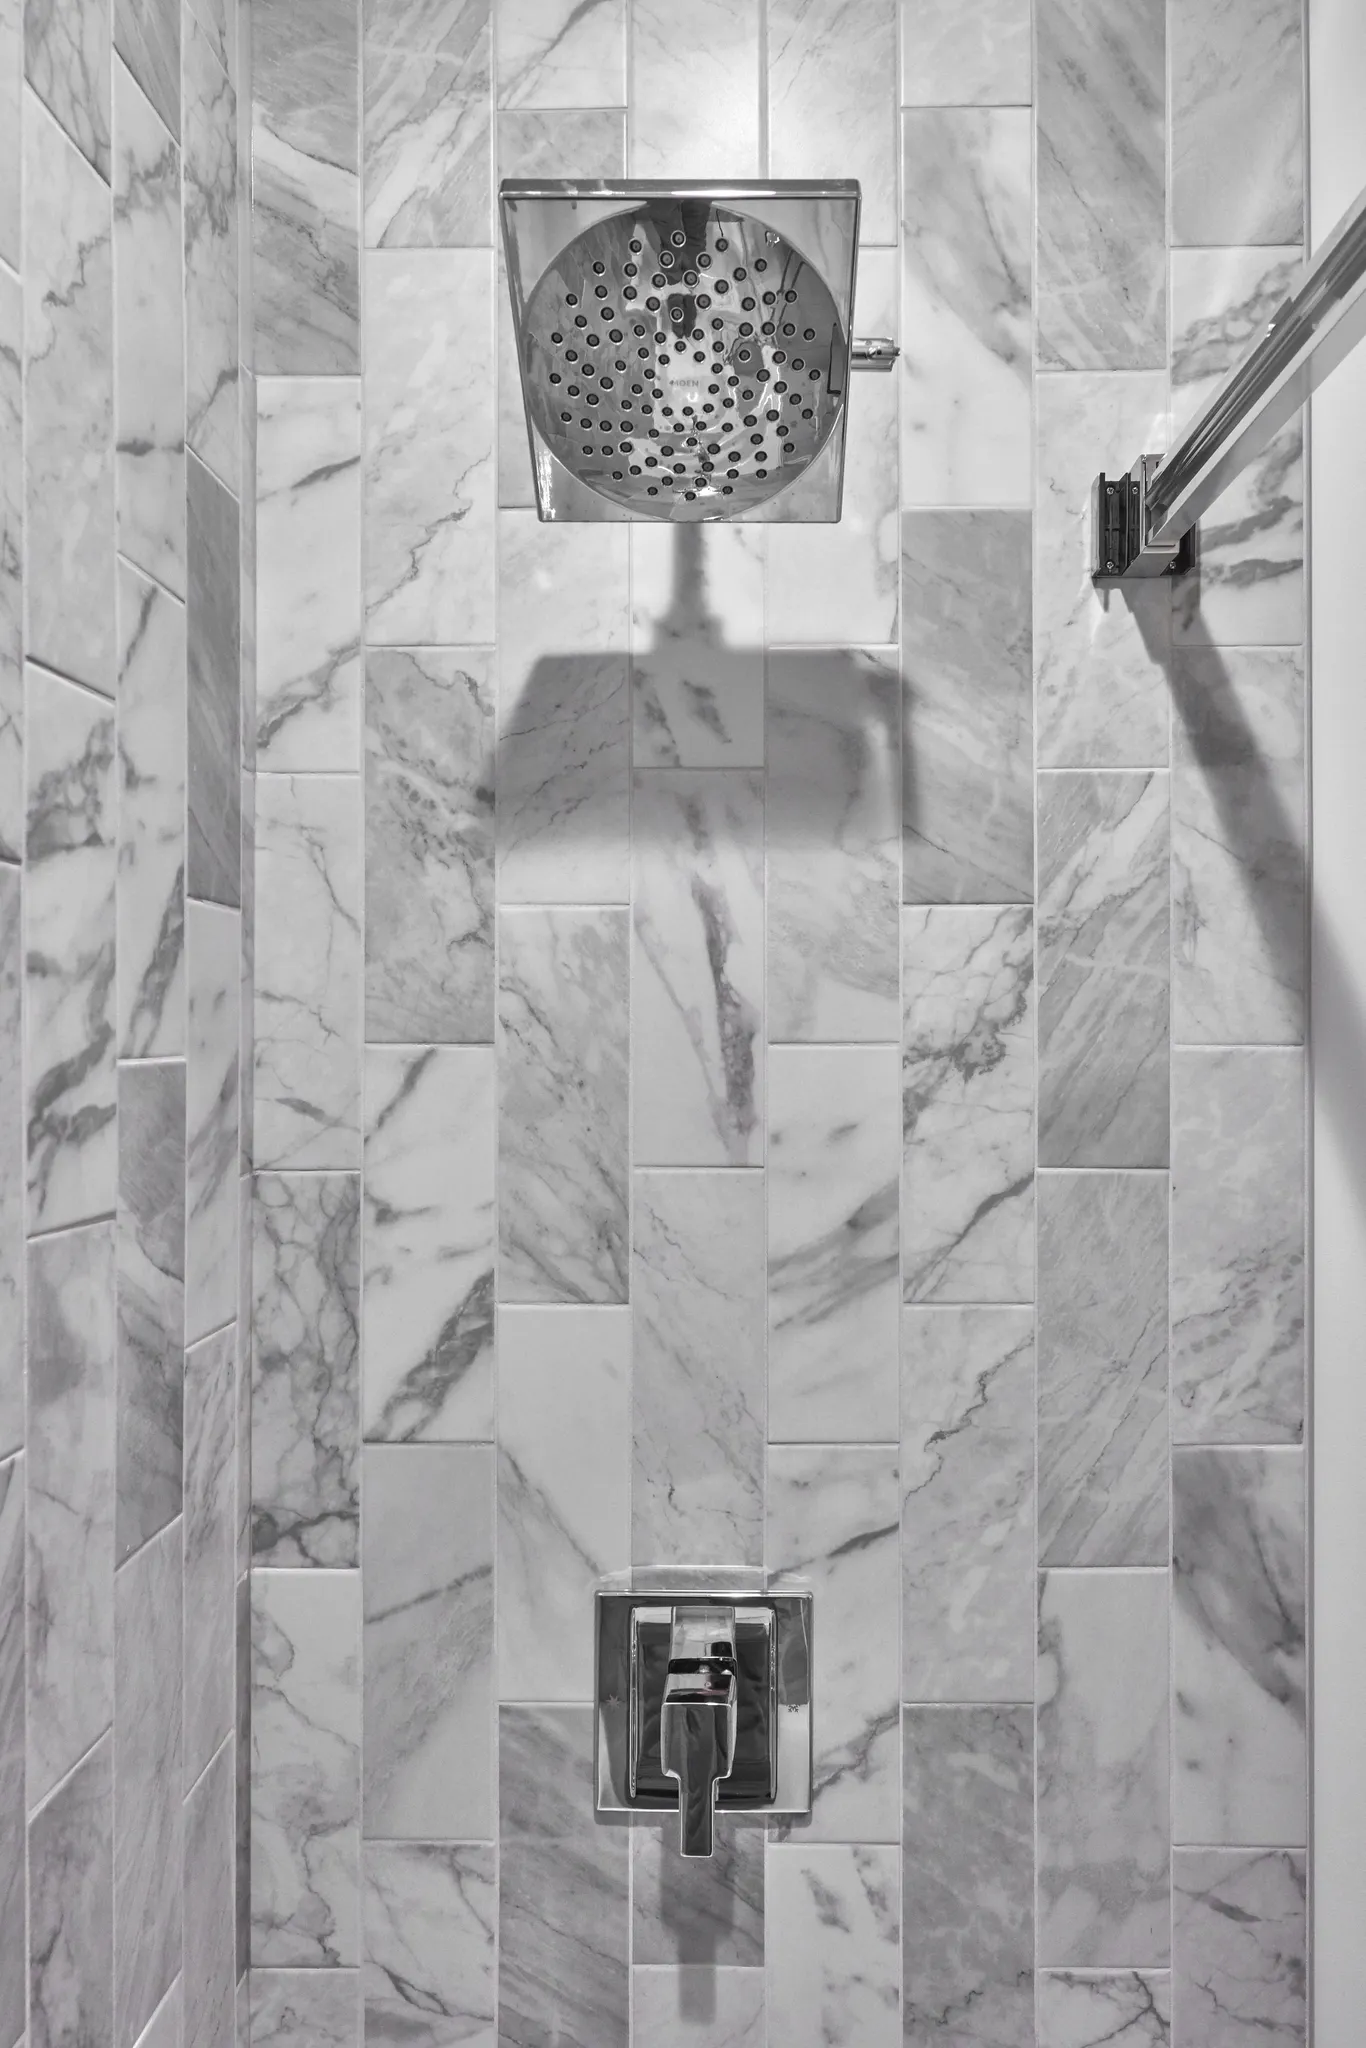 Guest bath - Shower tile and fixtures